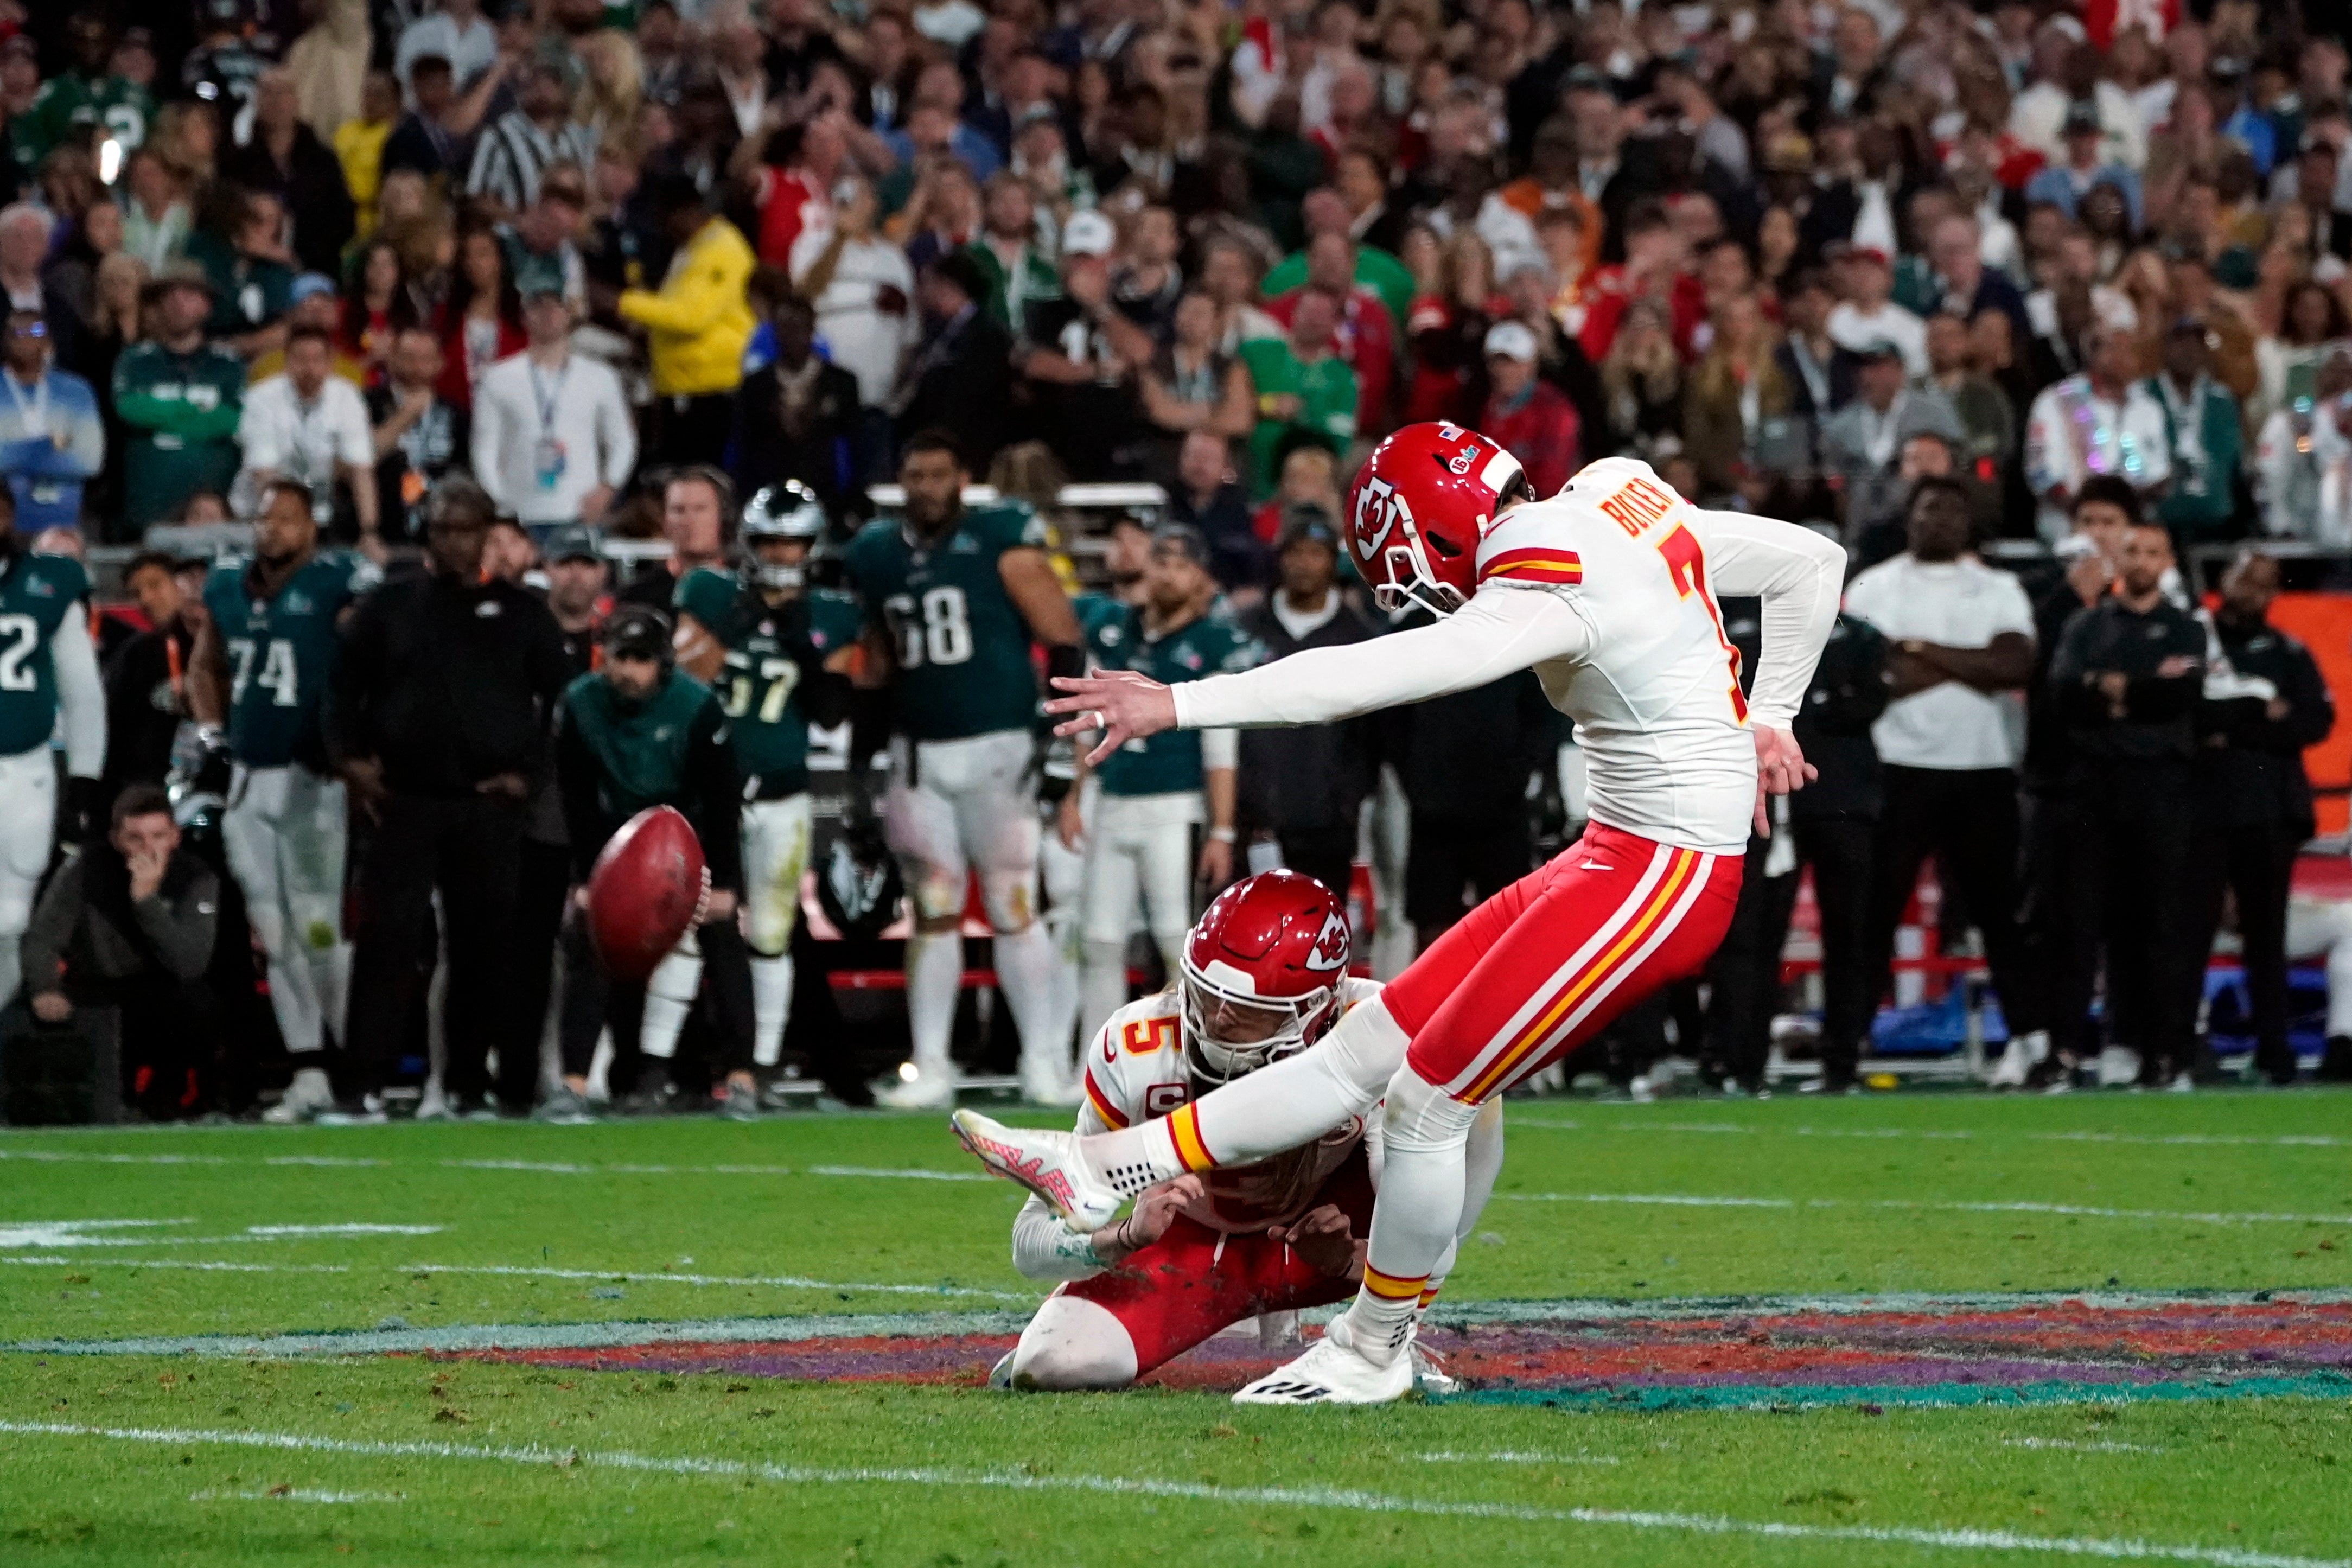 Kansas City Chiefs' kicker Harrison Butker scores the winning points during Super Bowl LVII between the Kansas City Chiefs and the Philadelphia Eagles